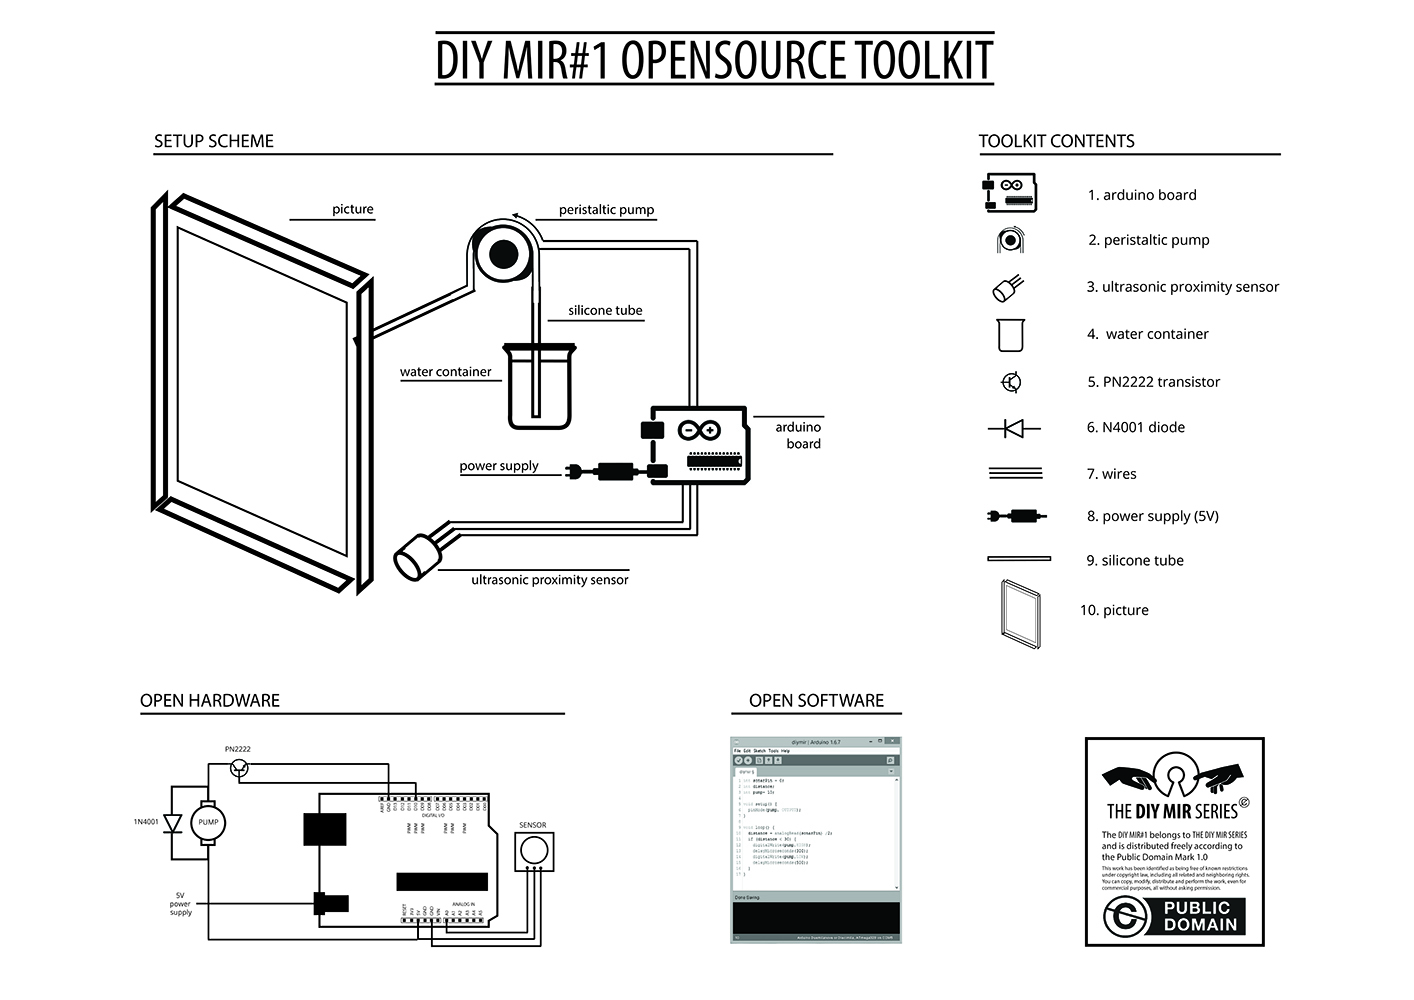 diy-mir-1-opensource-toolkit-1000.jpg